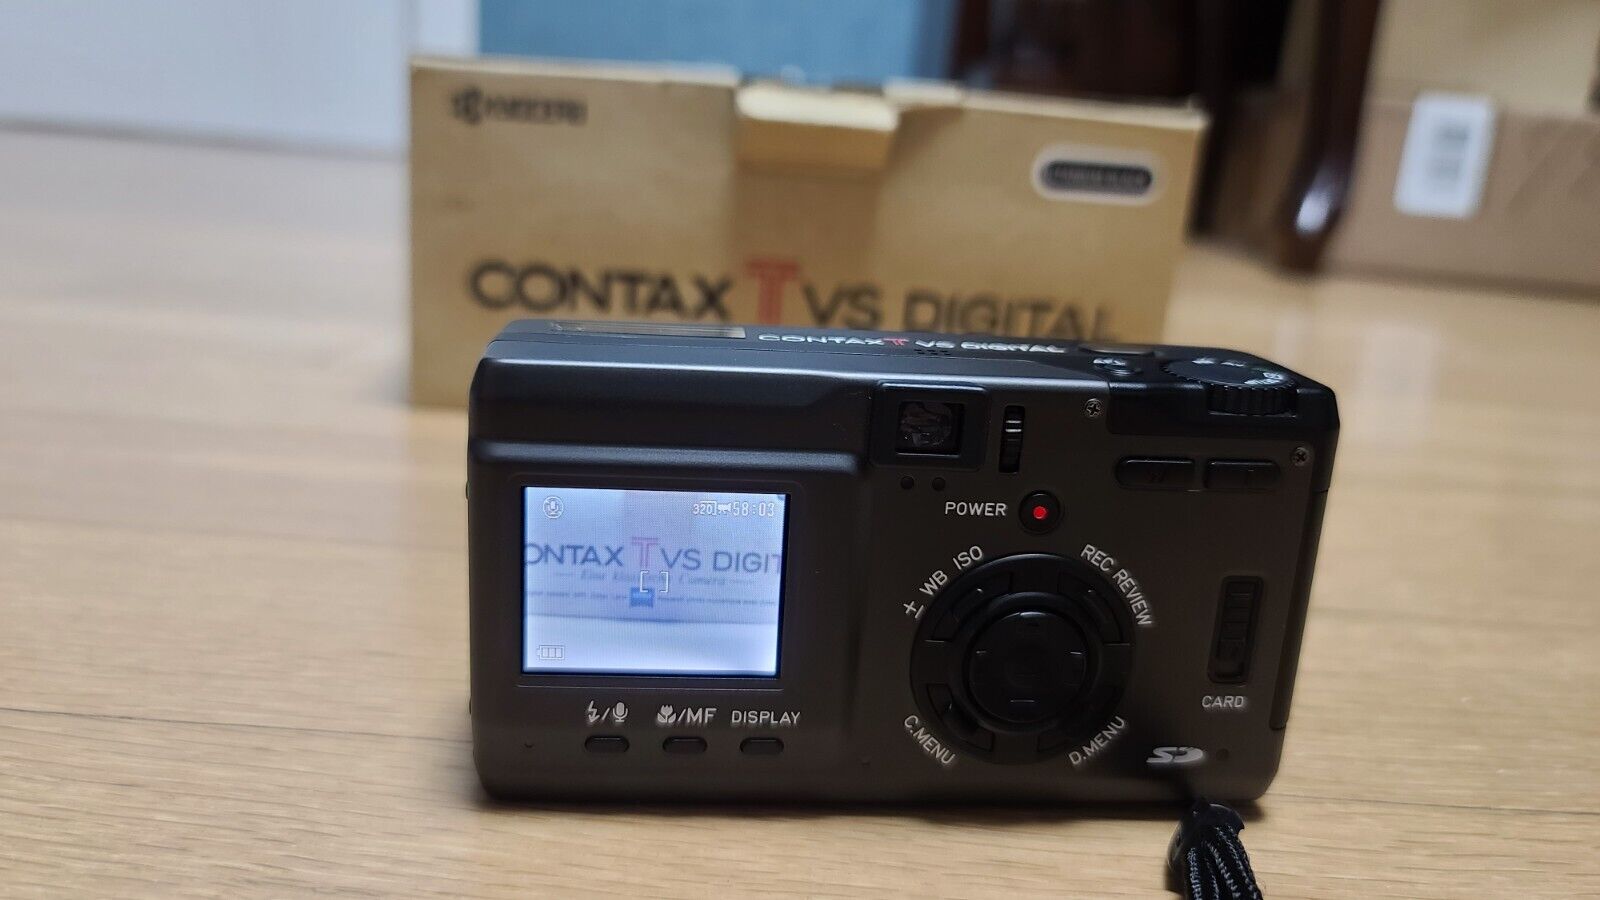 Contax TVS Digital 5.0MP Digital Camera - Titanium black